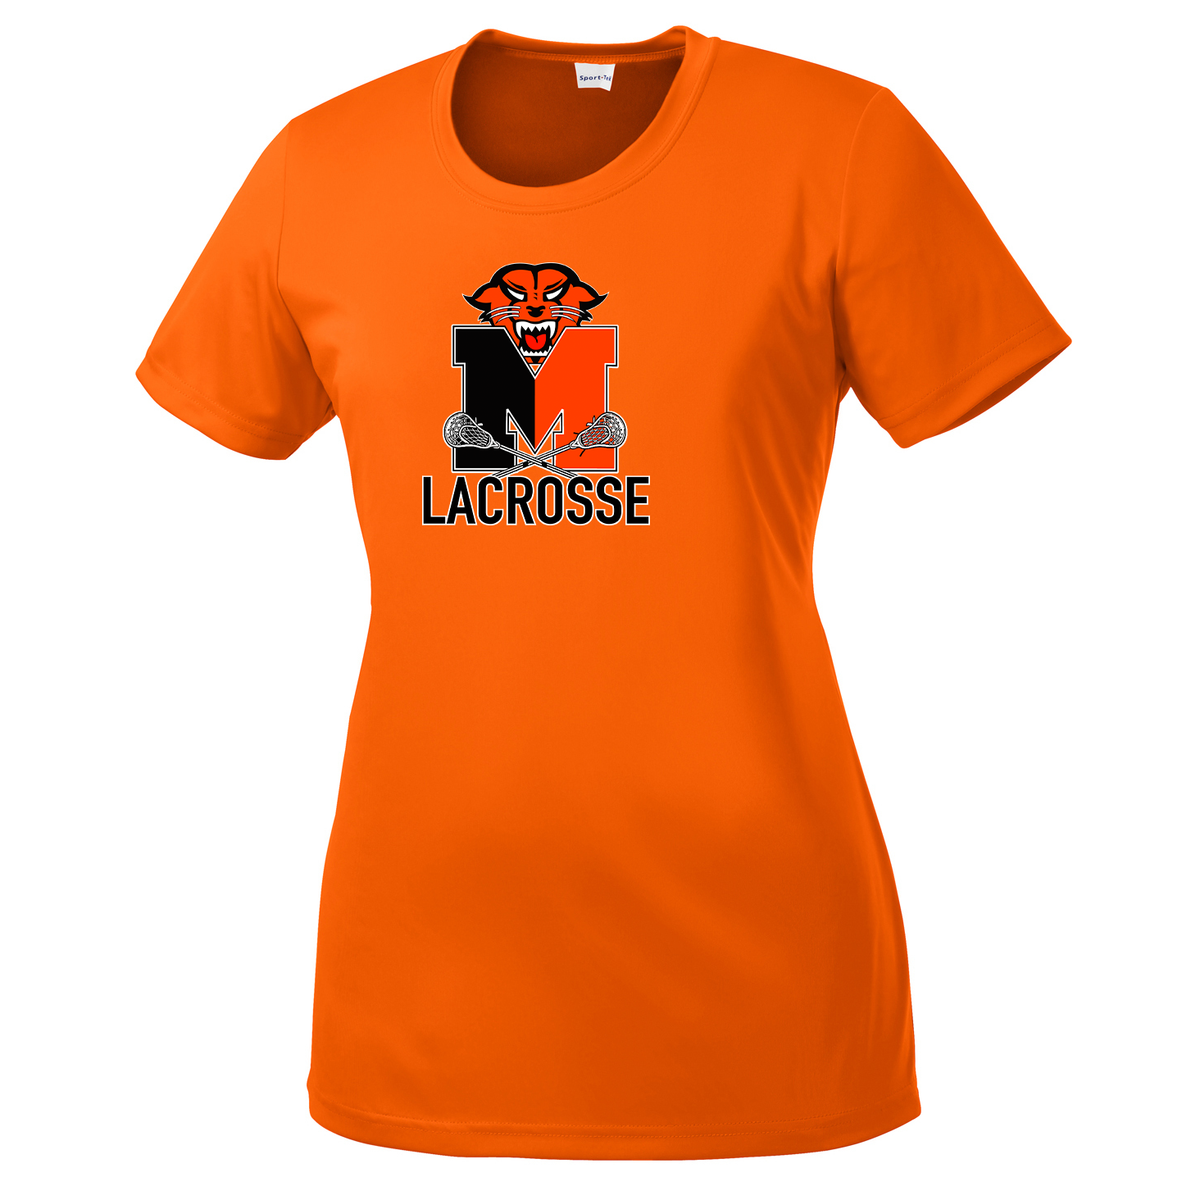 Monroe Lacrosse Women's Orange Performance Tee